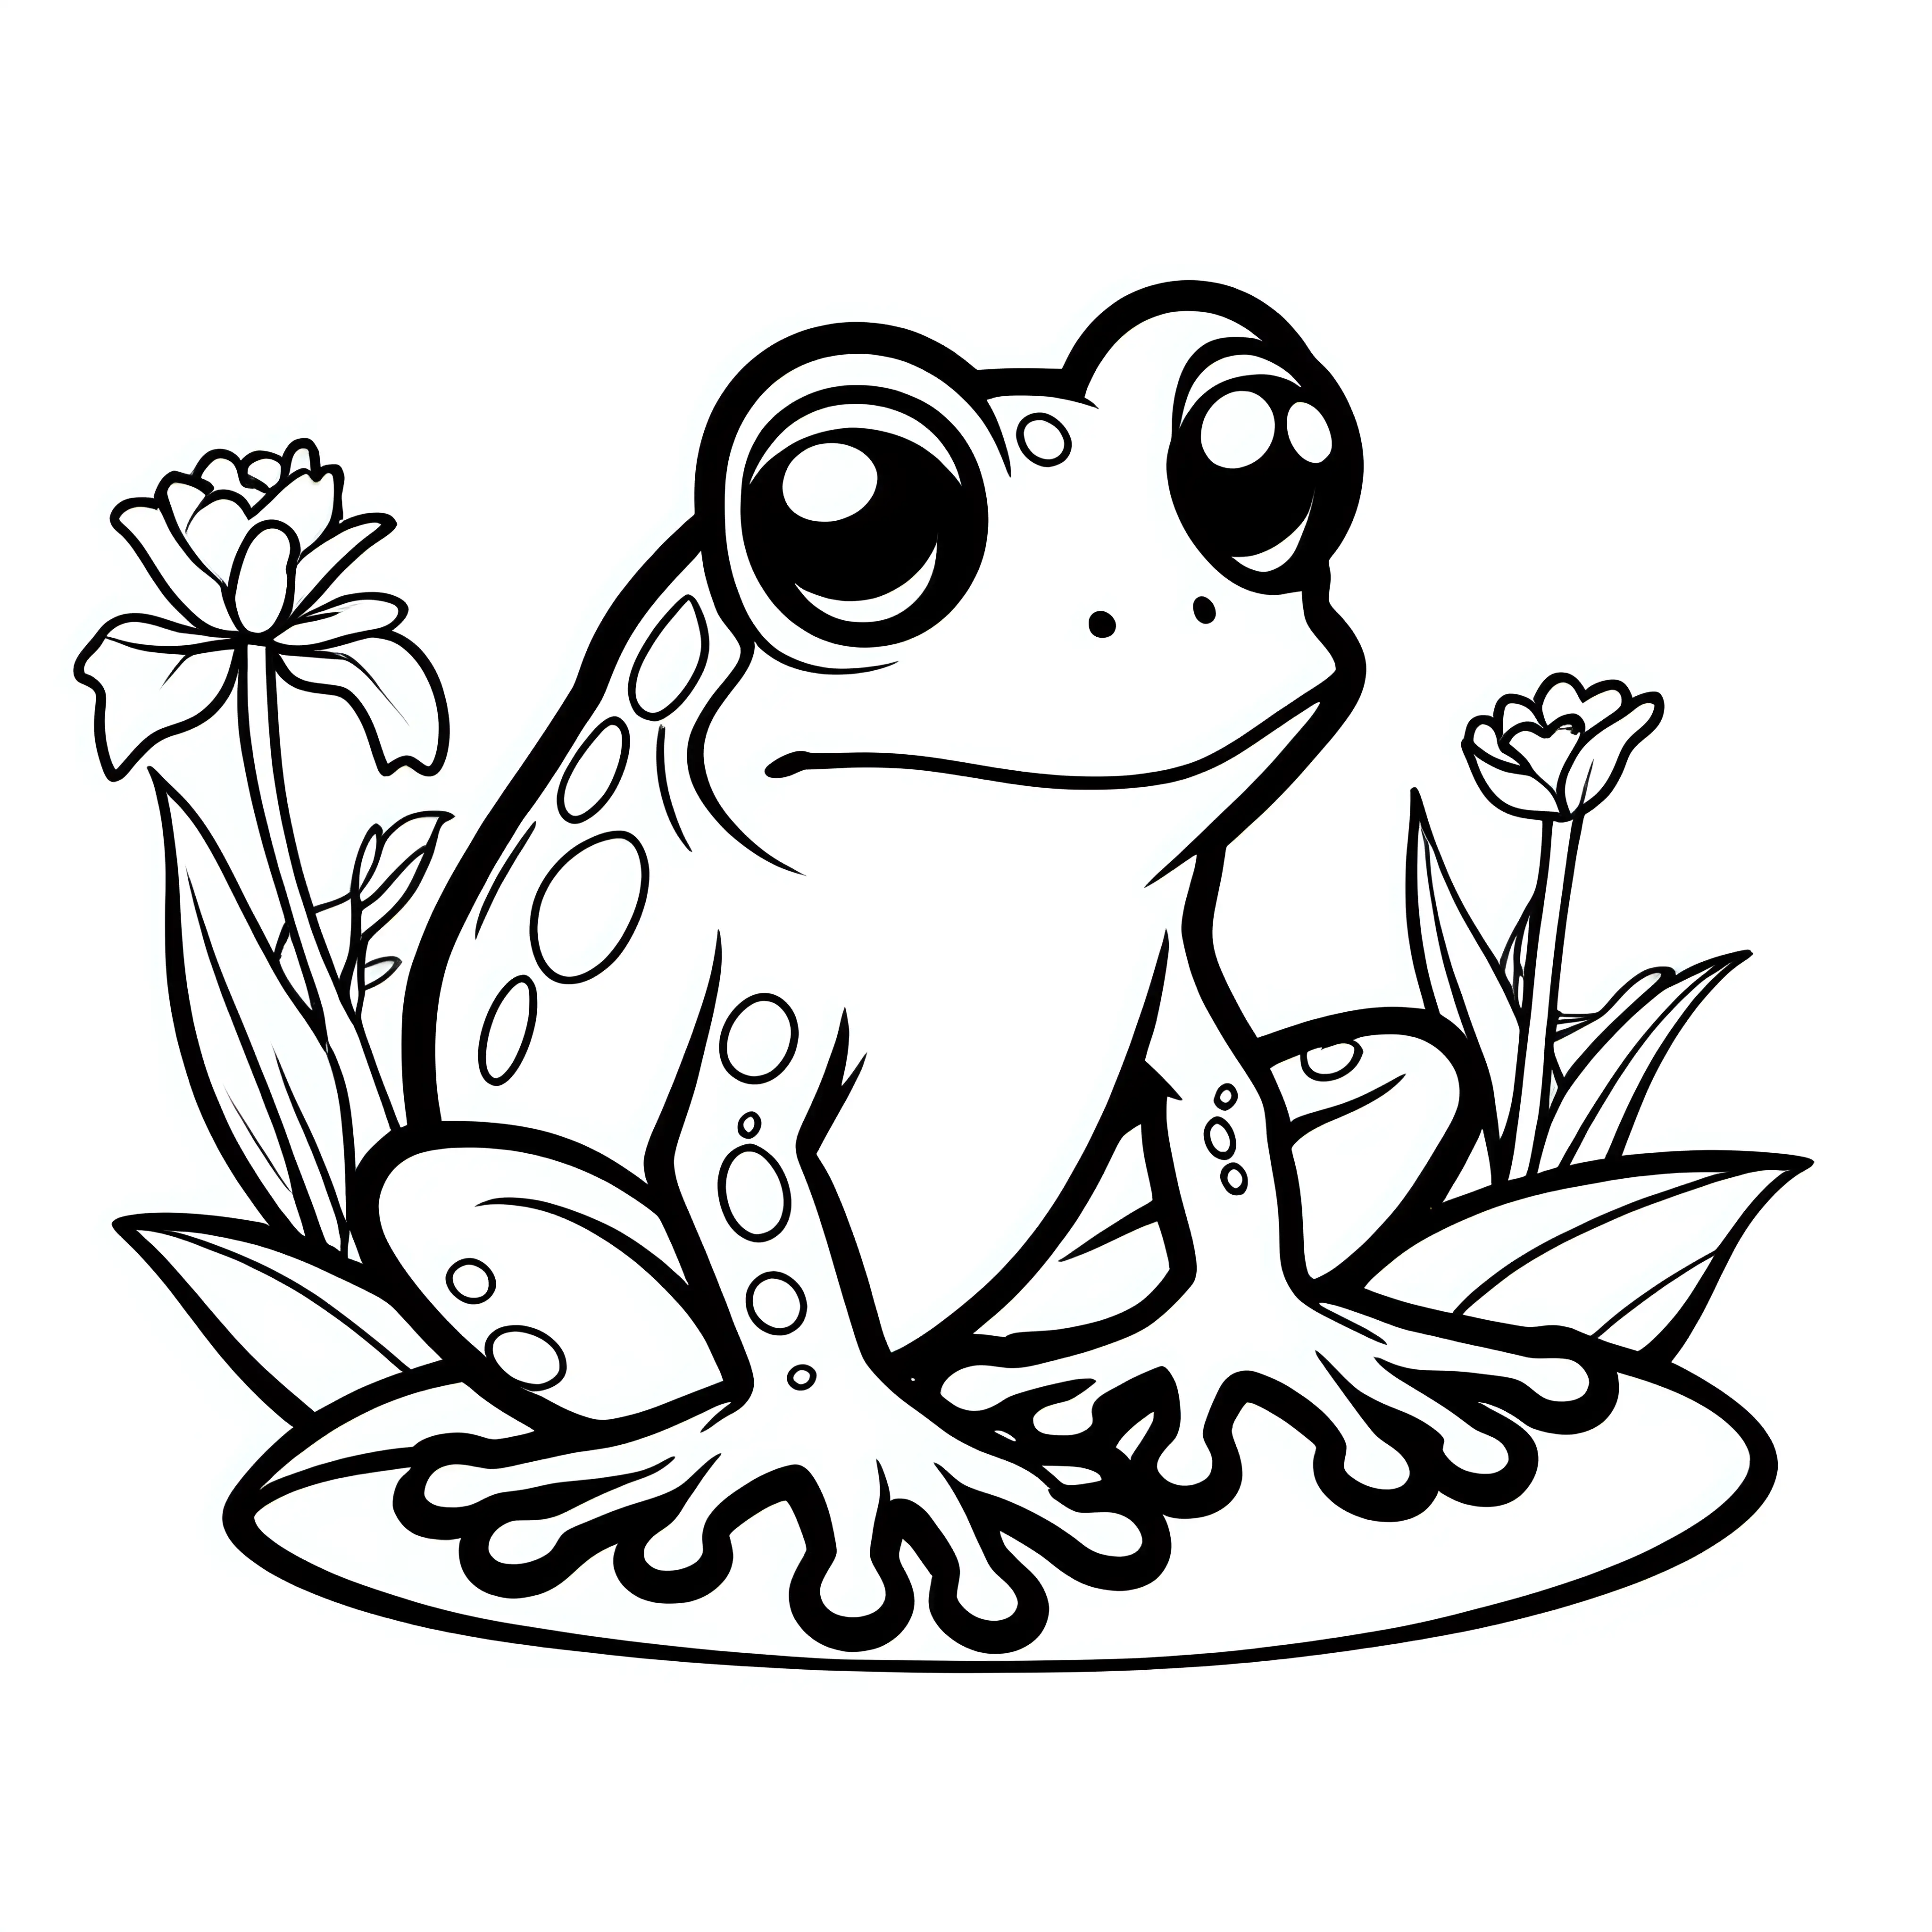 Cute Little Frog | Cute small drawings, Cute doodles drawings, Frog drawing